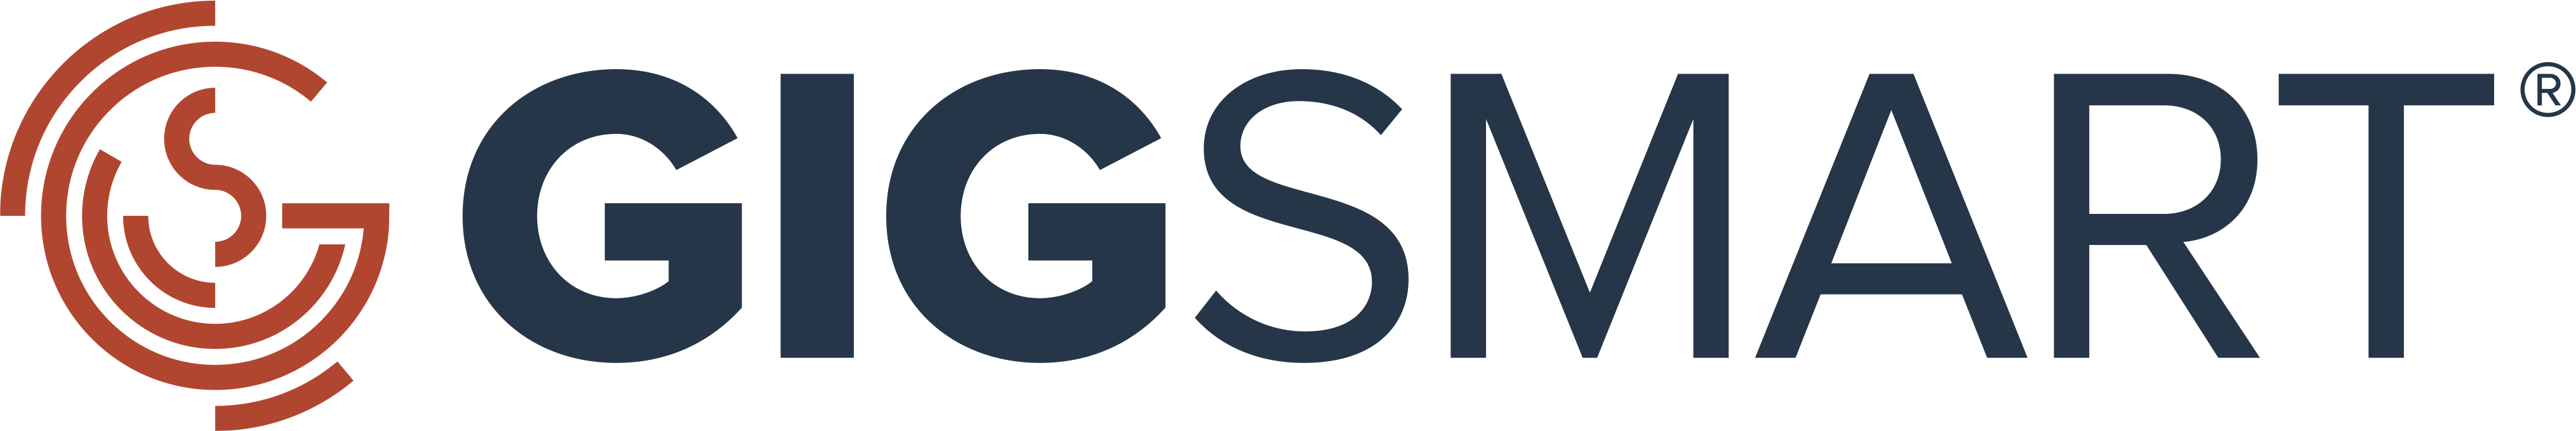 GigSmart-logo